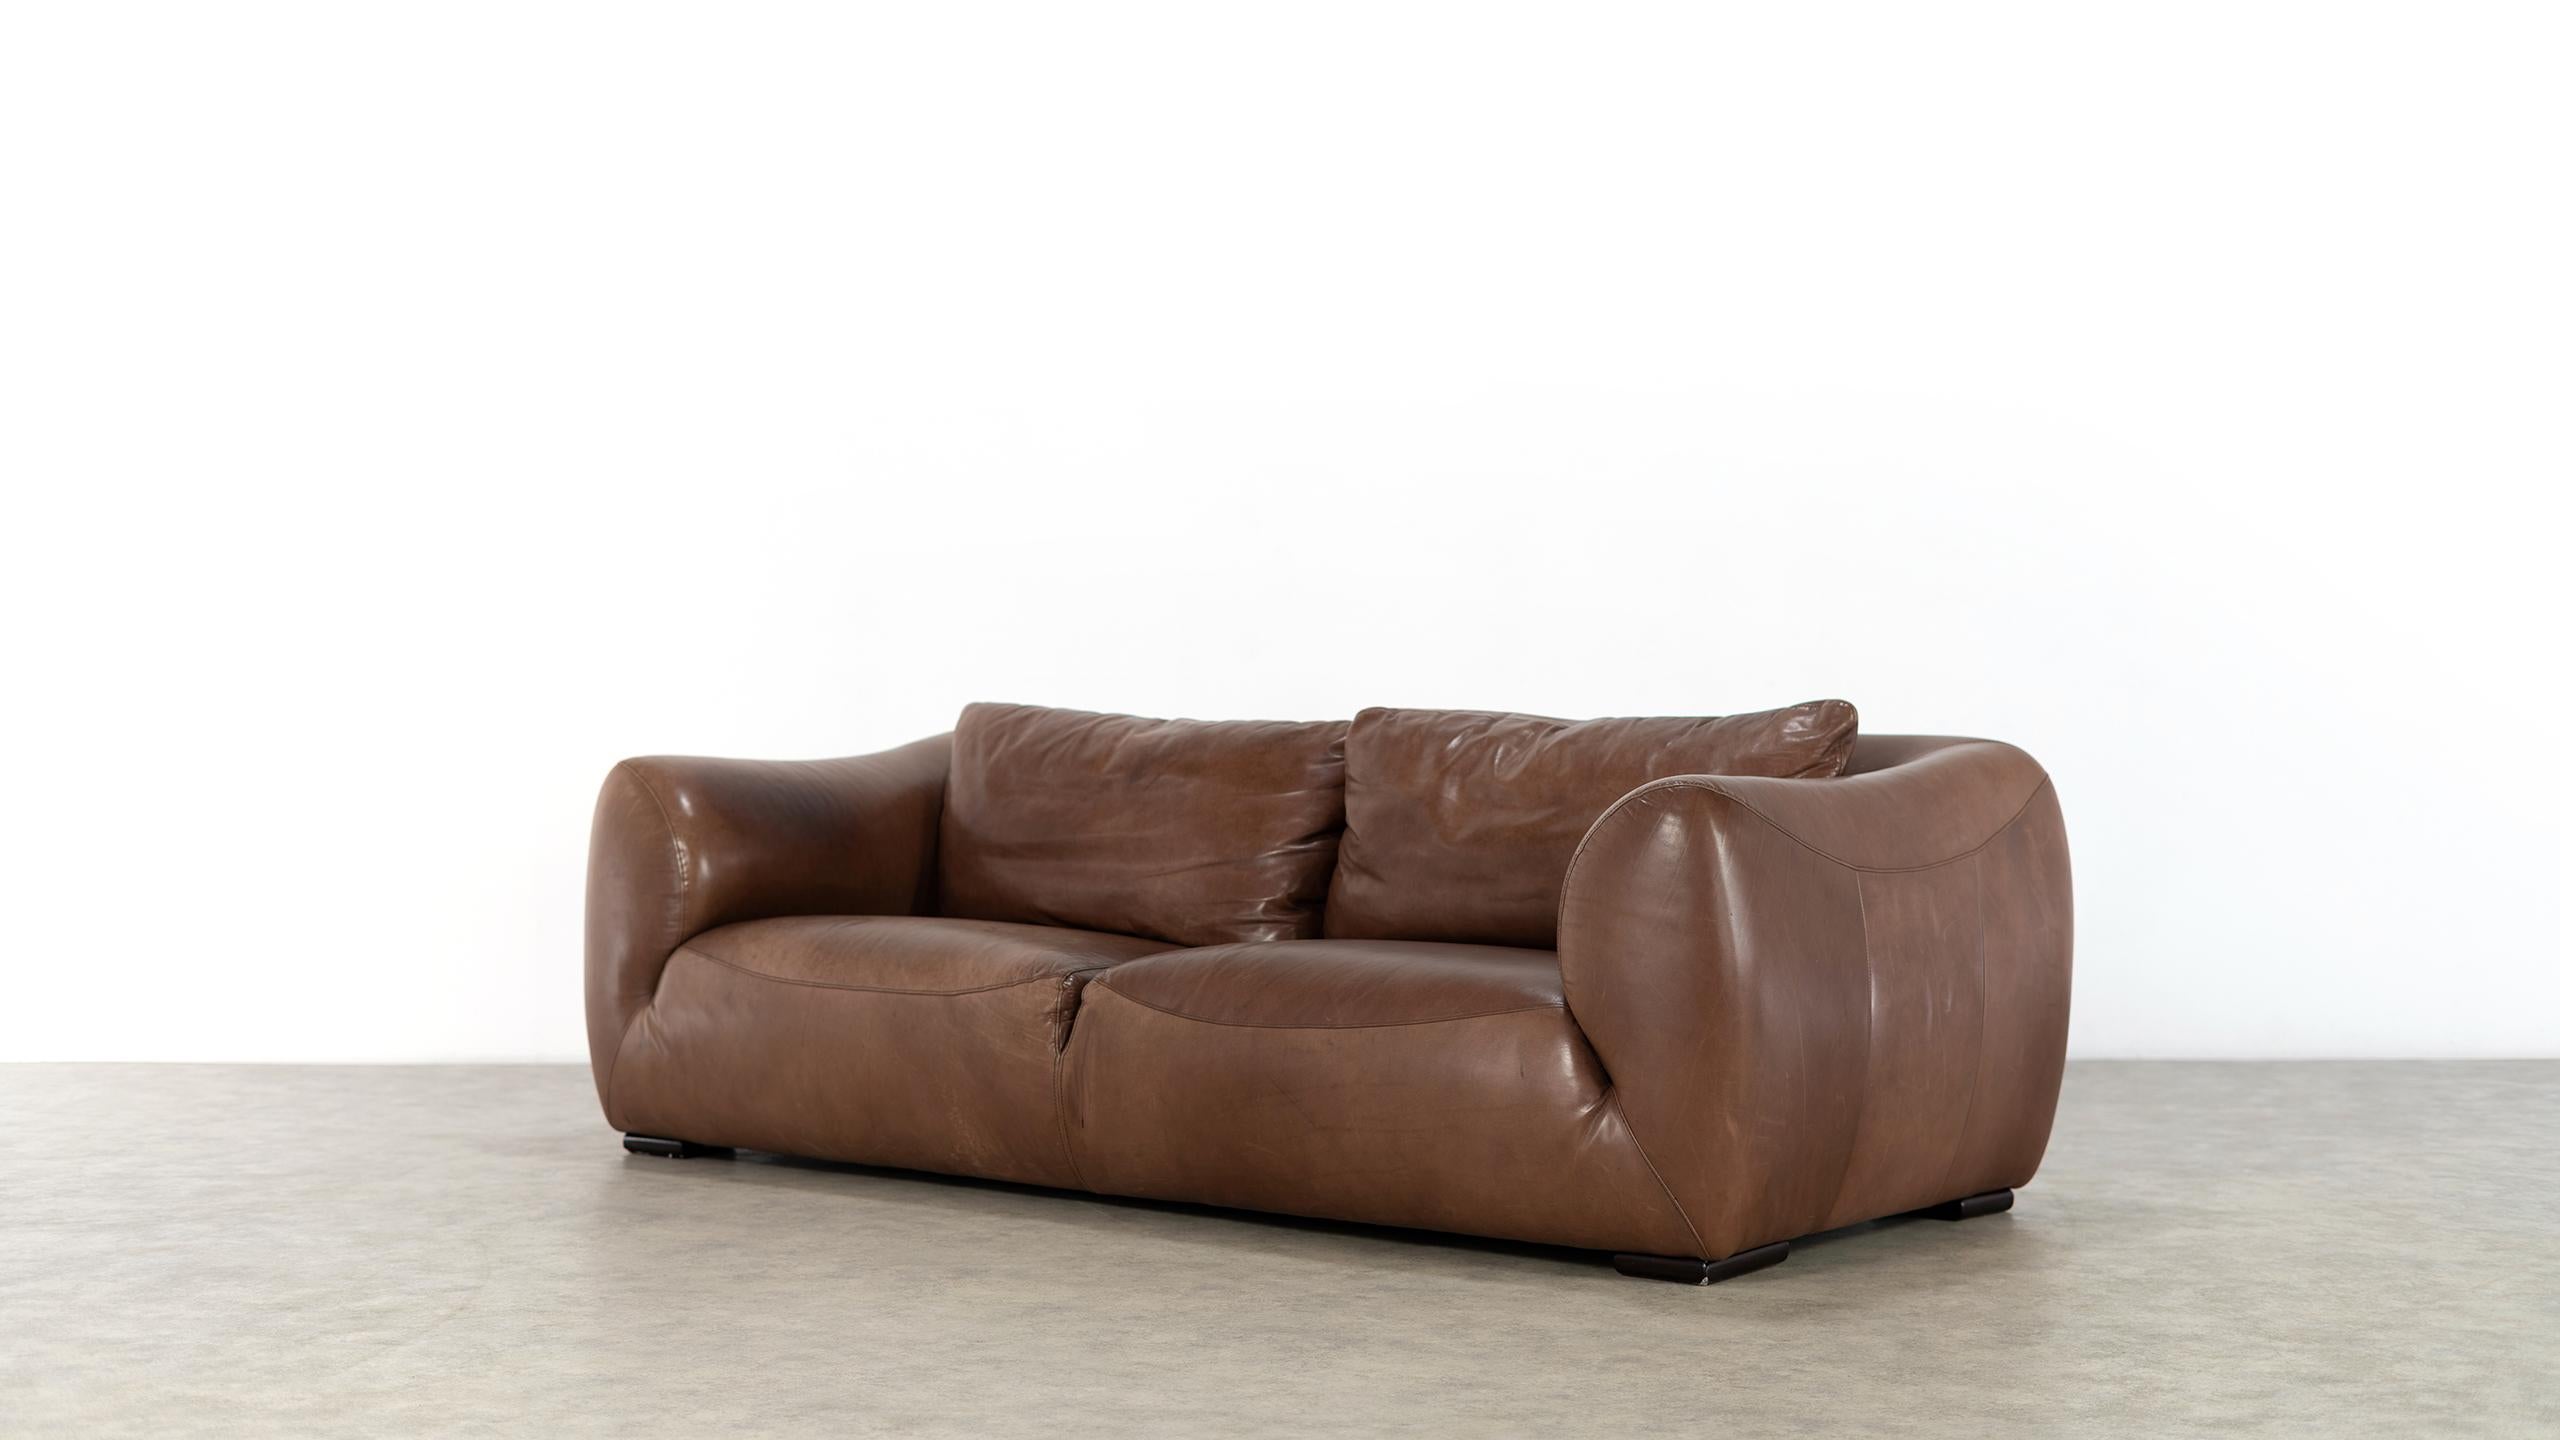 Dutch Gerard van den Berg 'attr. to', Sofa in Chocolate Leather, 1970 Netherlands